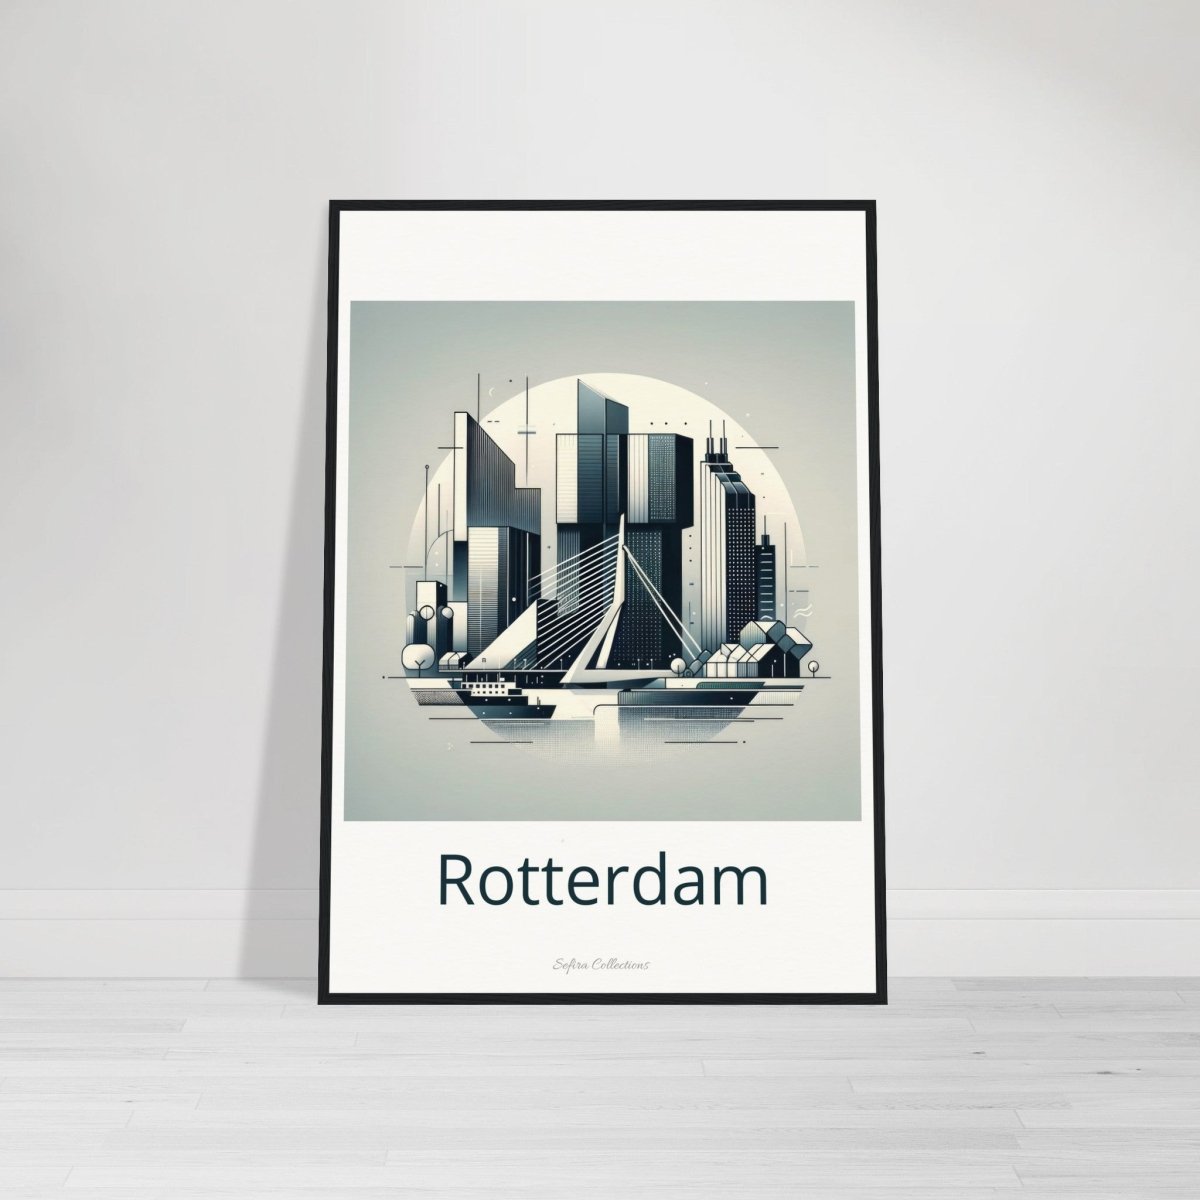 Sefira Rotterdam Travel Art Museum-Quality Matte Paper Wooden Framed Poster | Sefira Art Gallery - Print Material - Sefira Collections